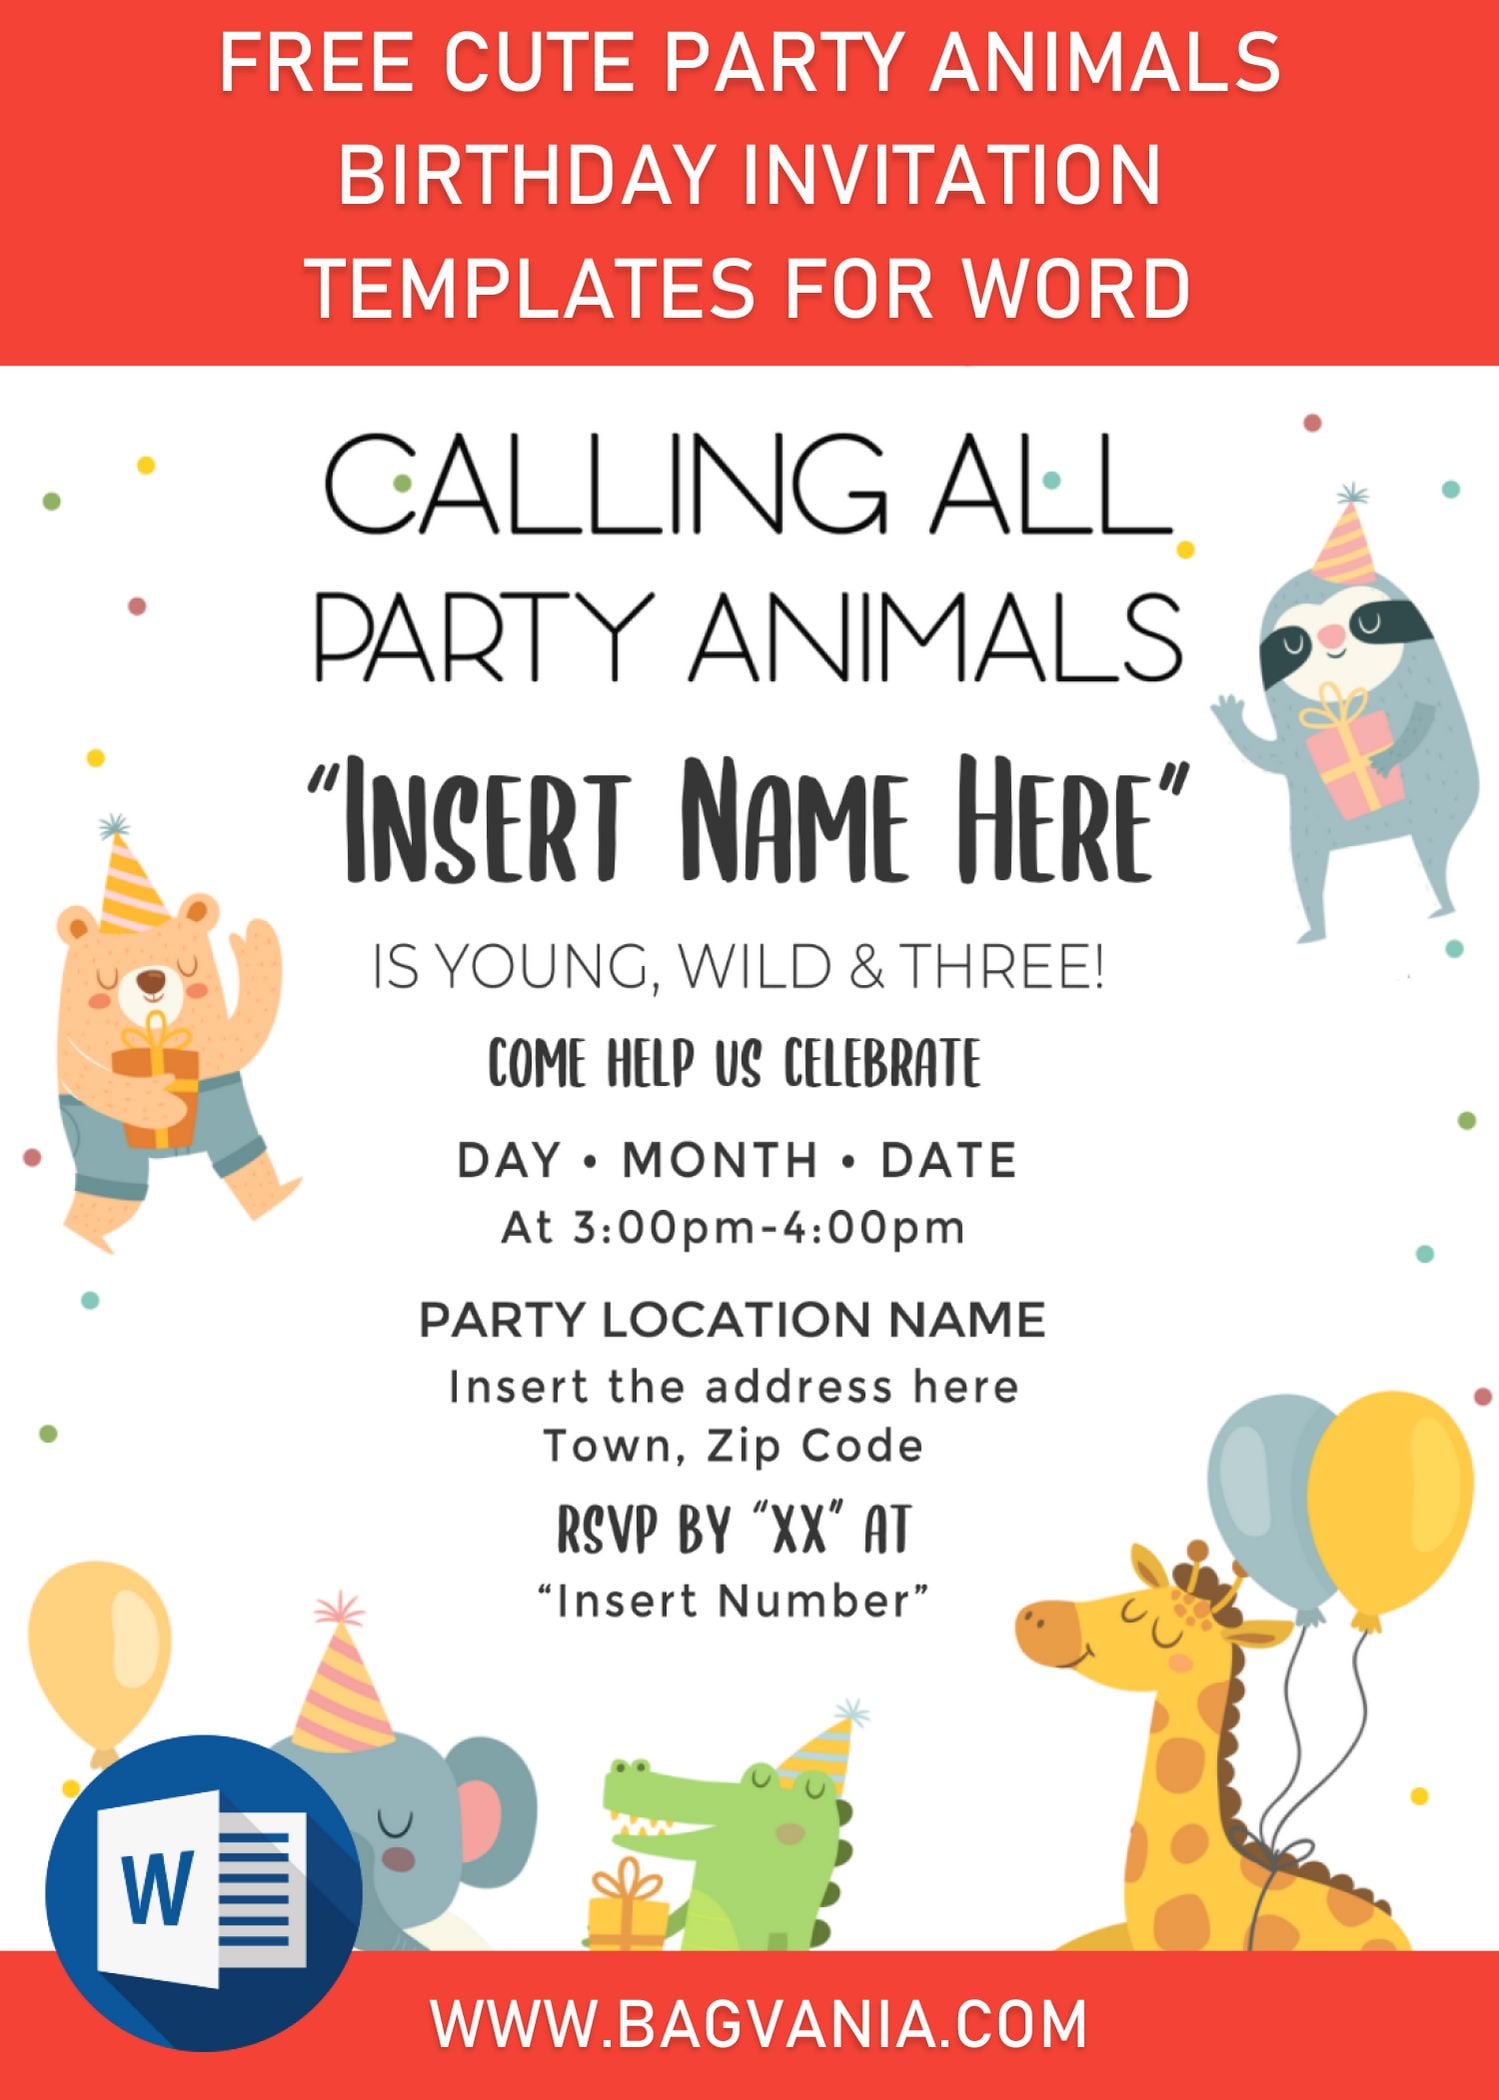 Free Cute Party Animals Birthday Invitation Templates For Word | FREE  Printable Birthday Invitation Templates - Bagvania